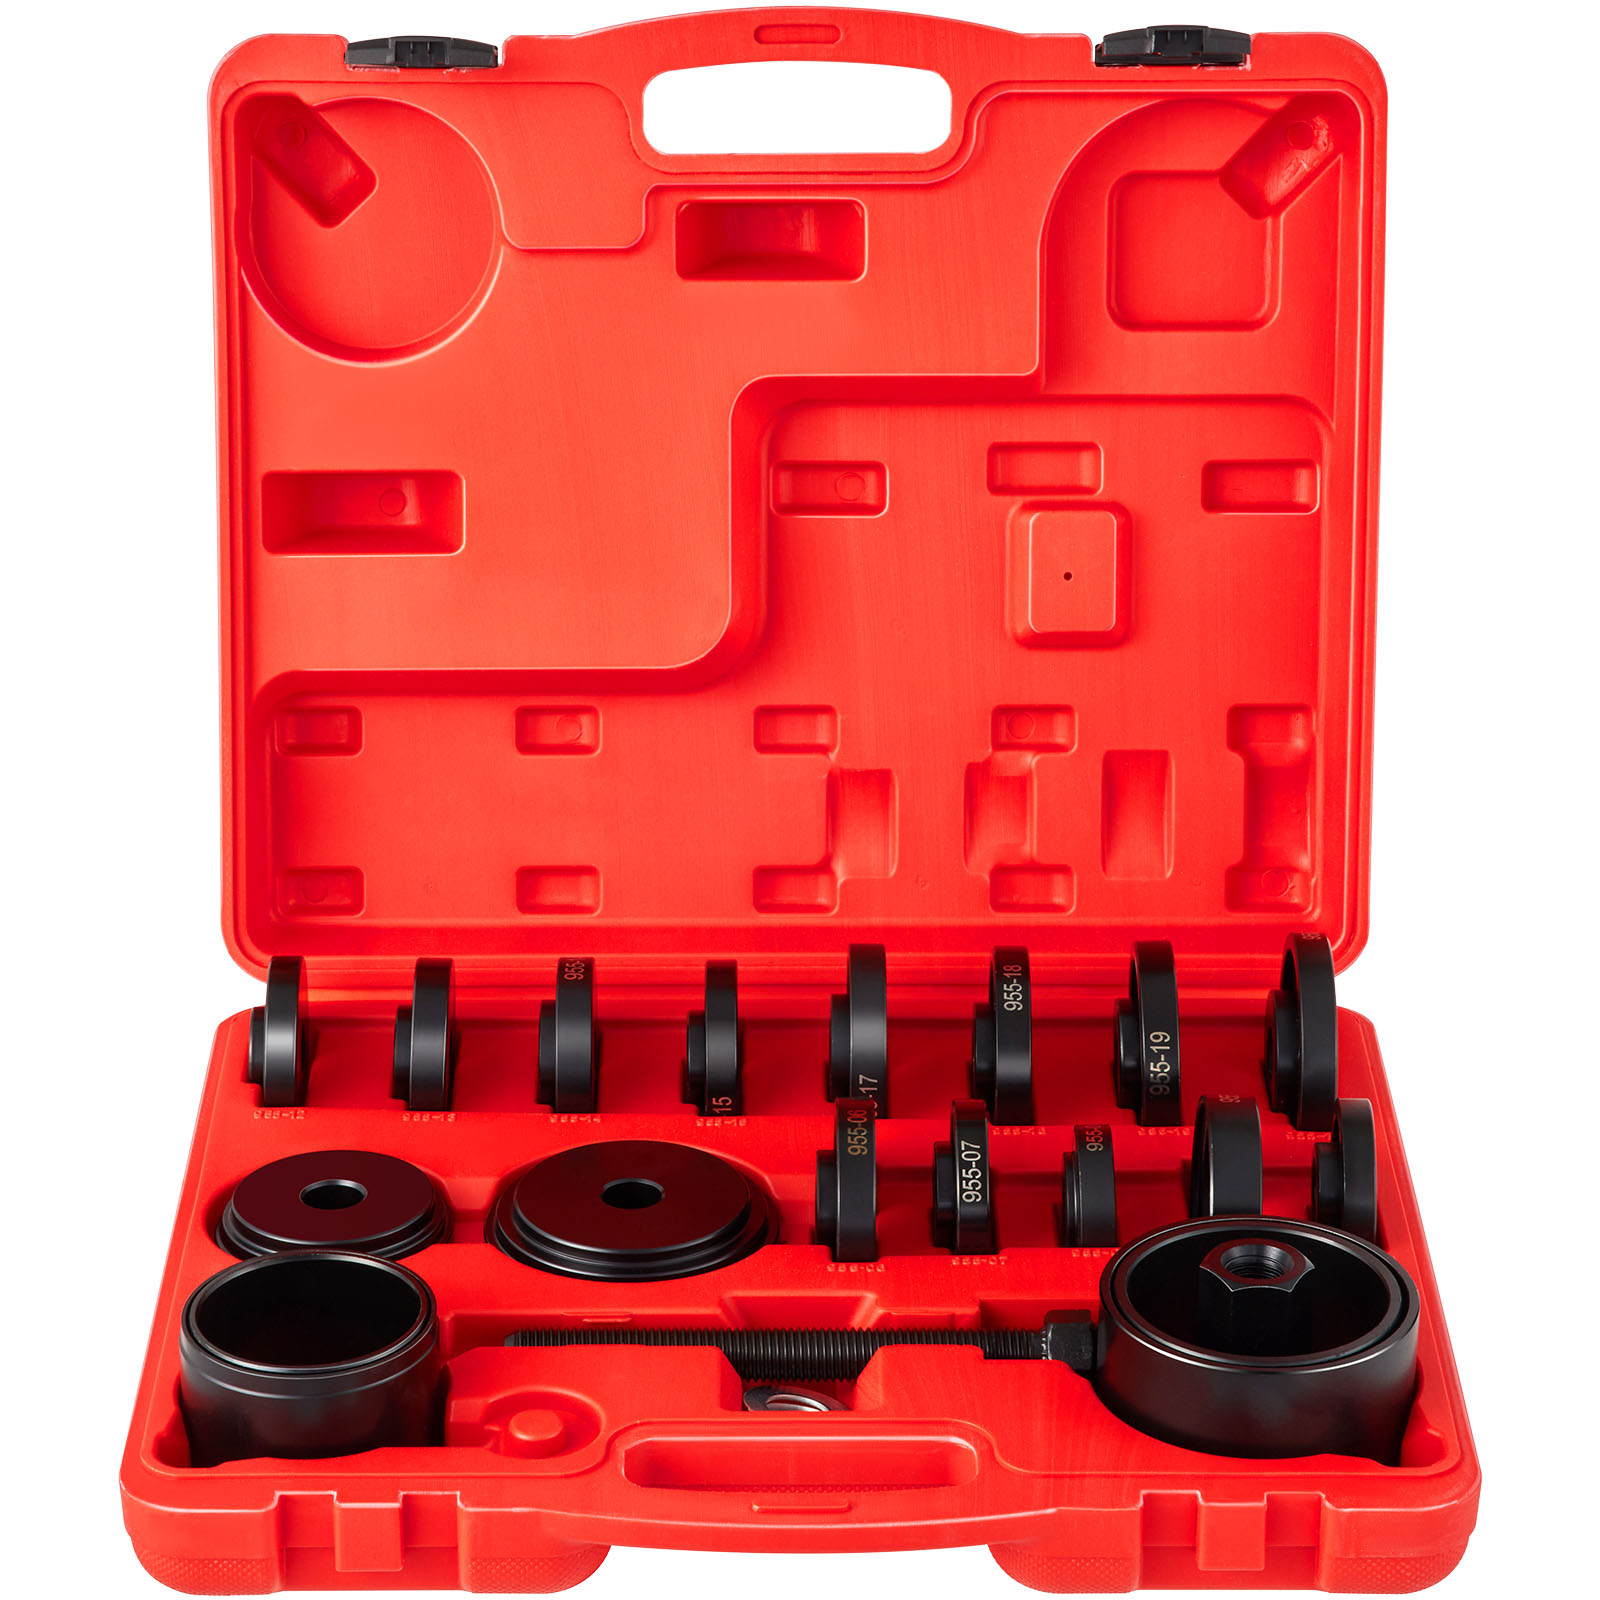 SALE／37%OFF】 Vehiclex Emergency Tire Repair Kit, 85 PCS Hi-Grade Tools  Supplies